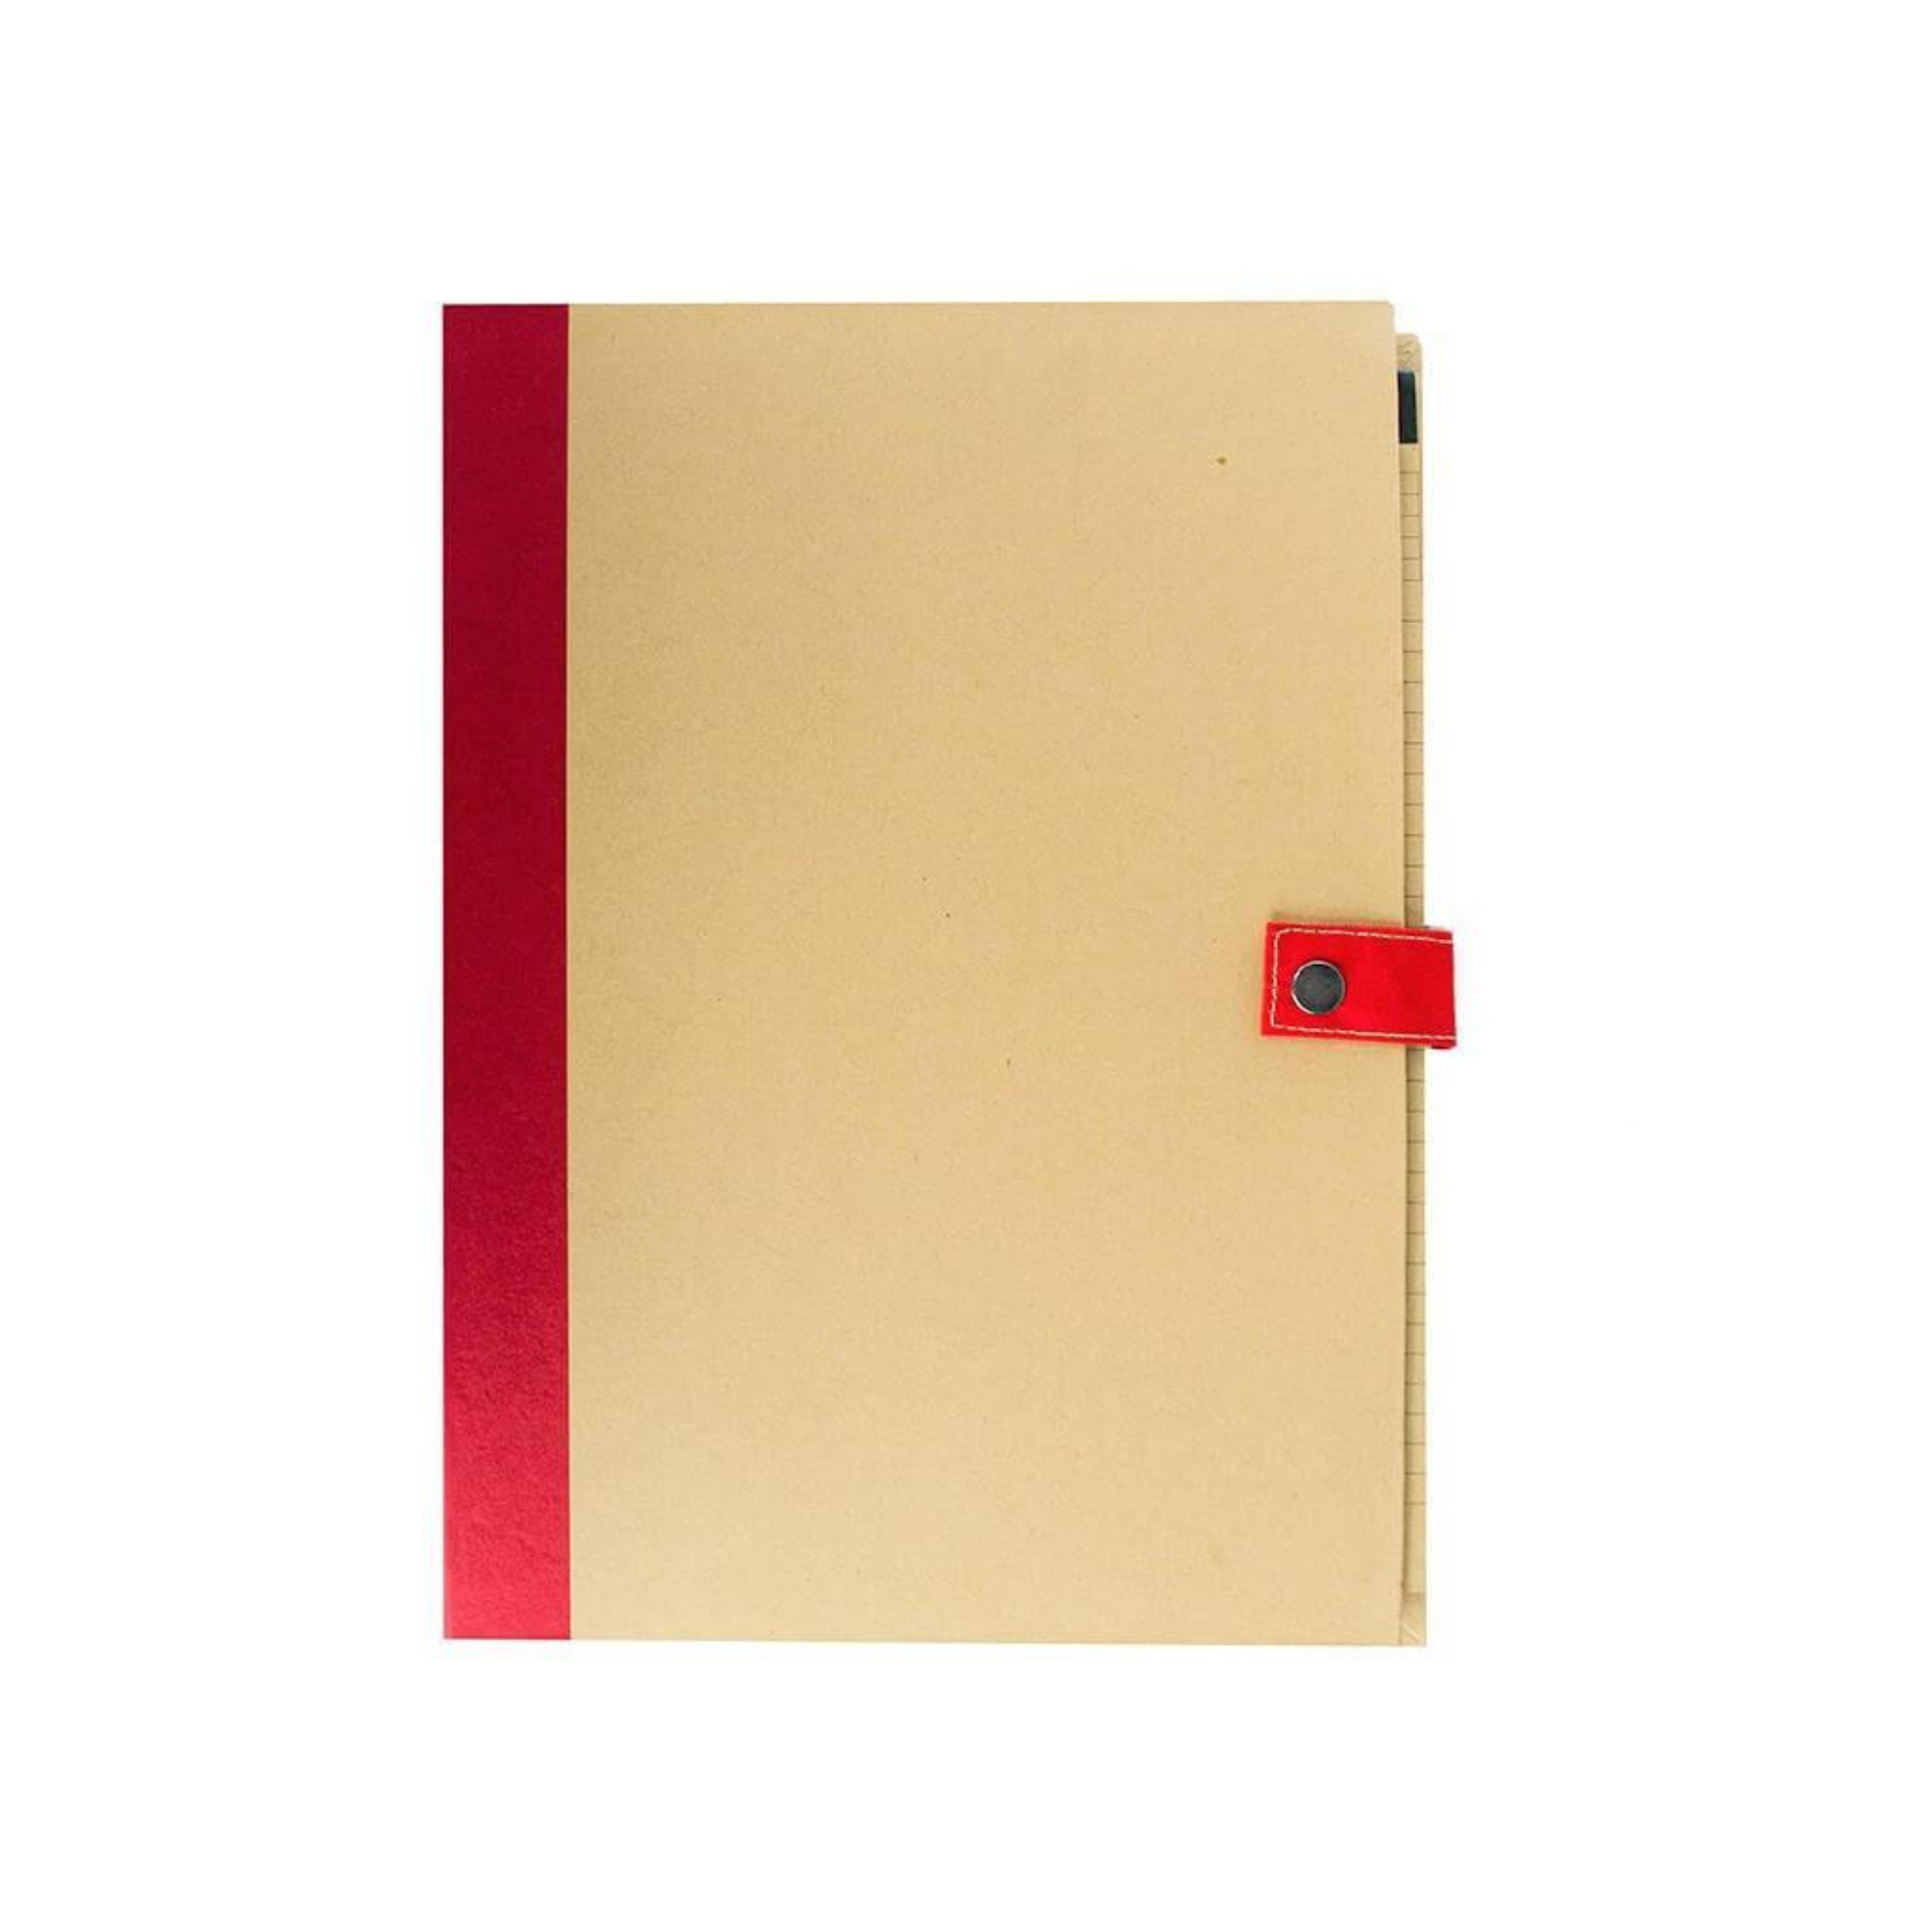 Eco-Neutral Sorbus A4 Folder With Pen